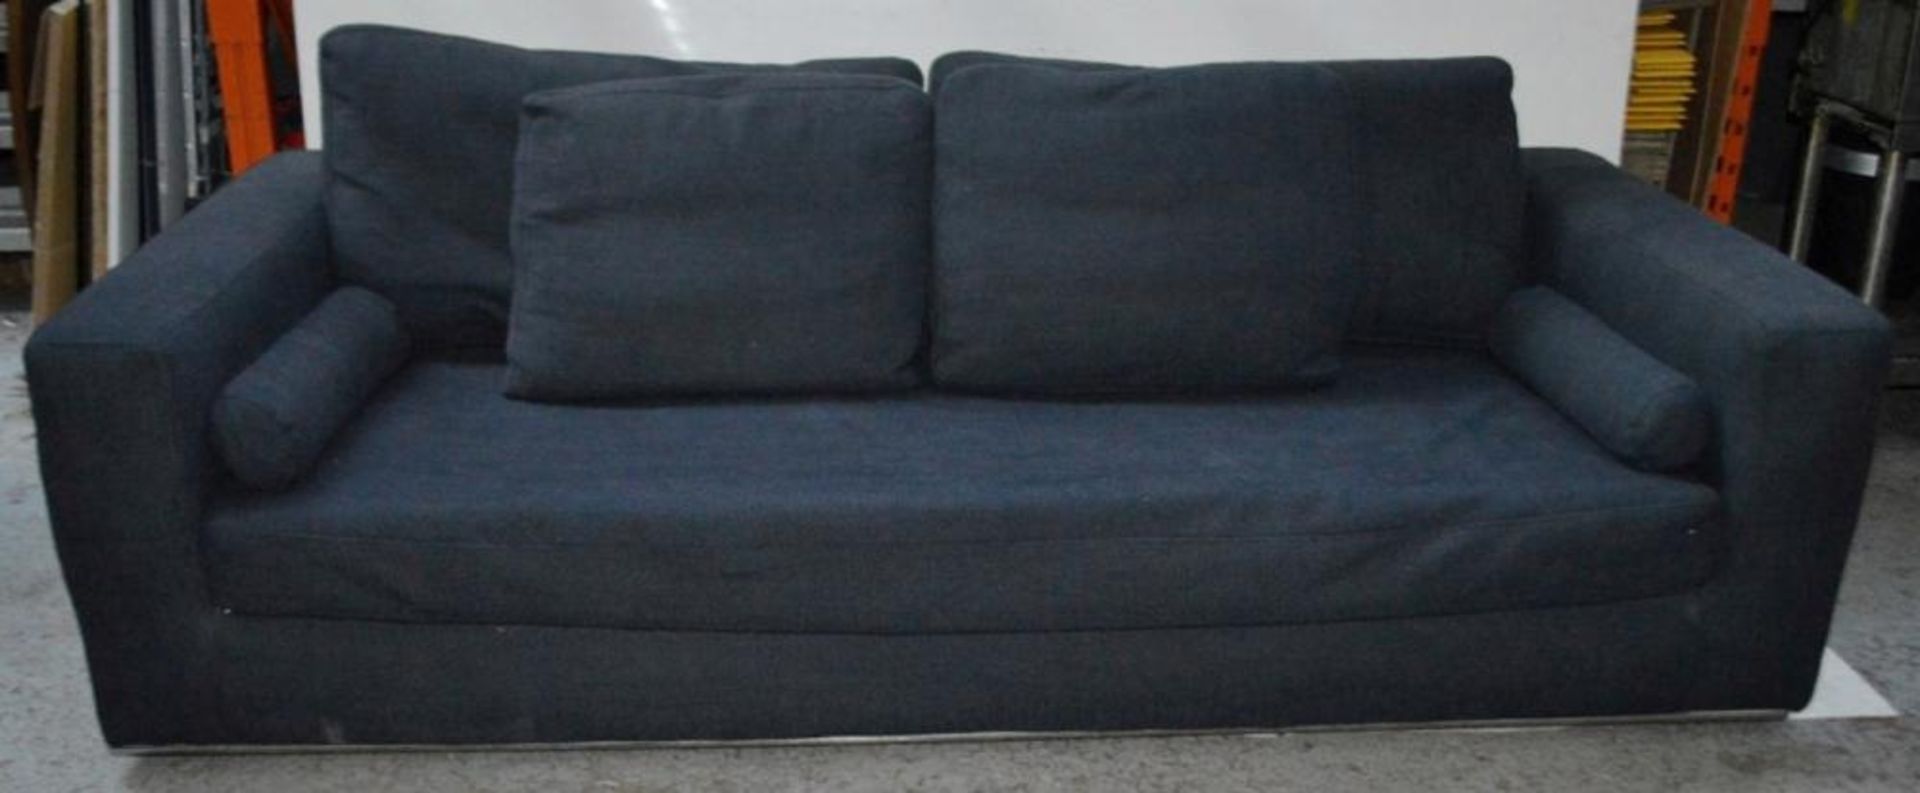 1 x Eichholtz Designer Sofa In A Dark Grey With Chrome Base - Dimensions: 230x100x60cm - Pre-owned *